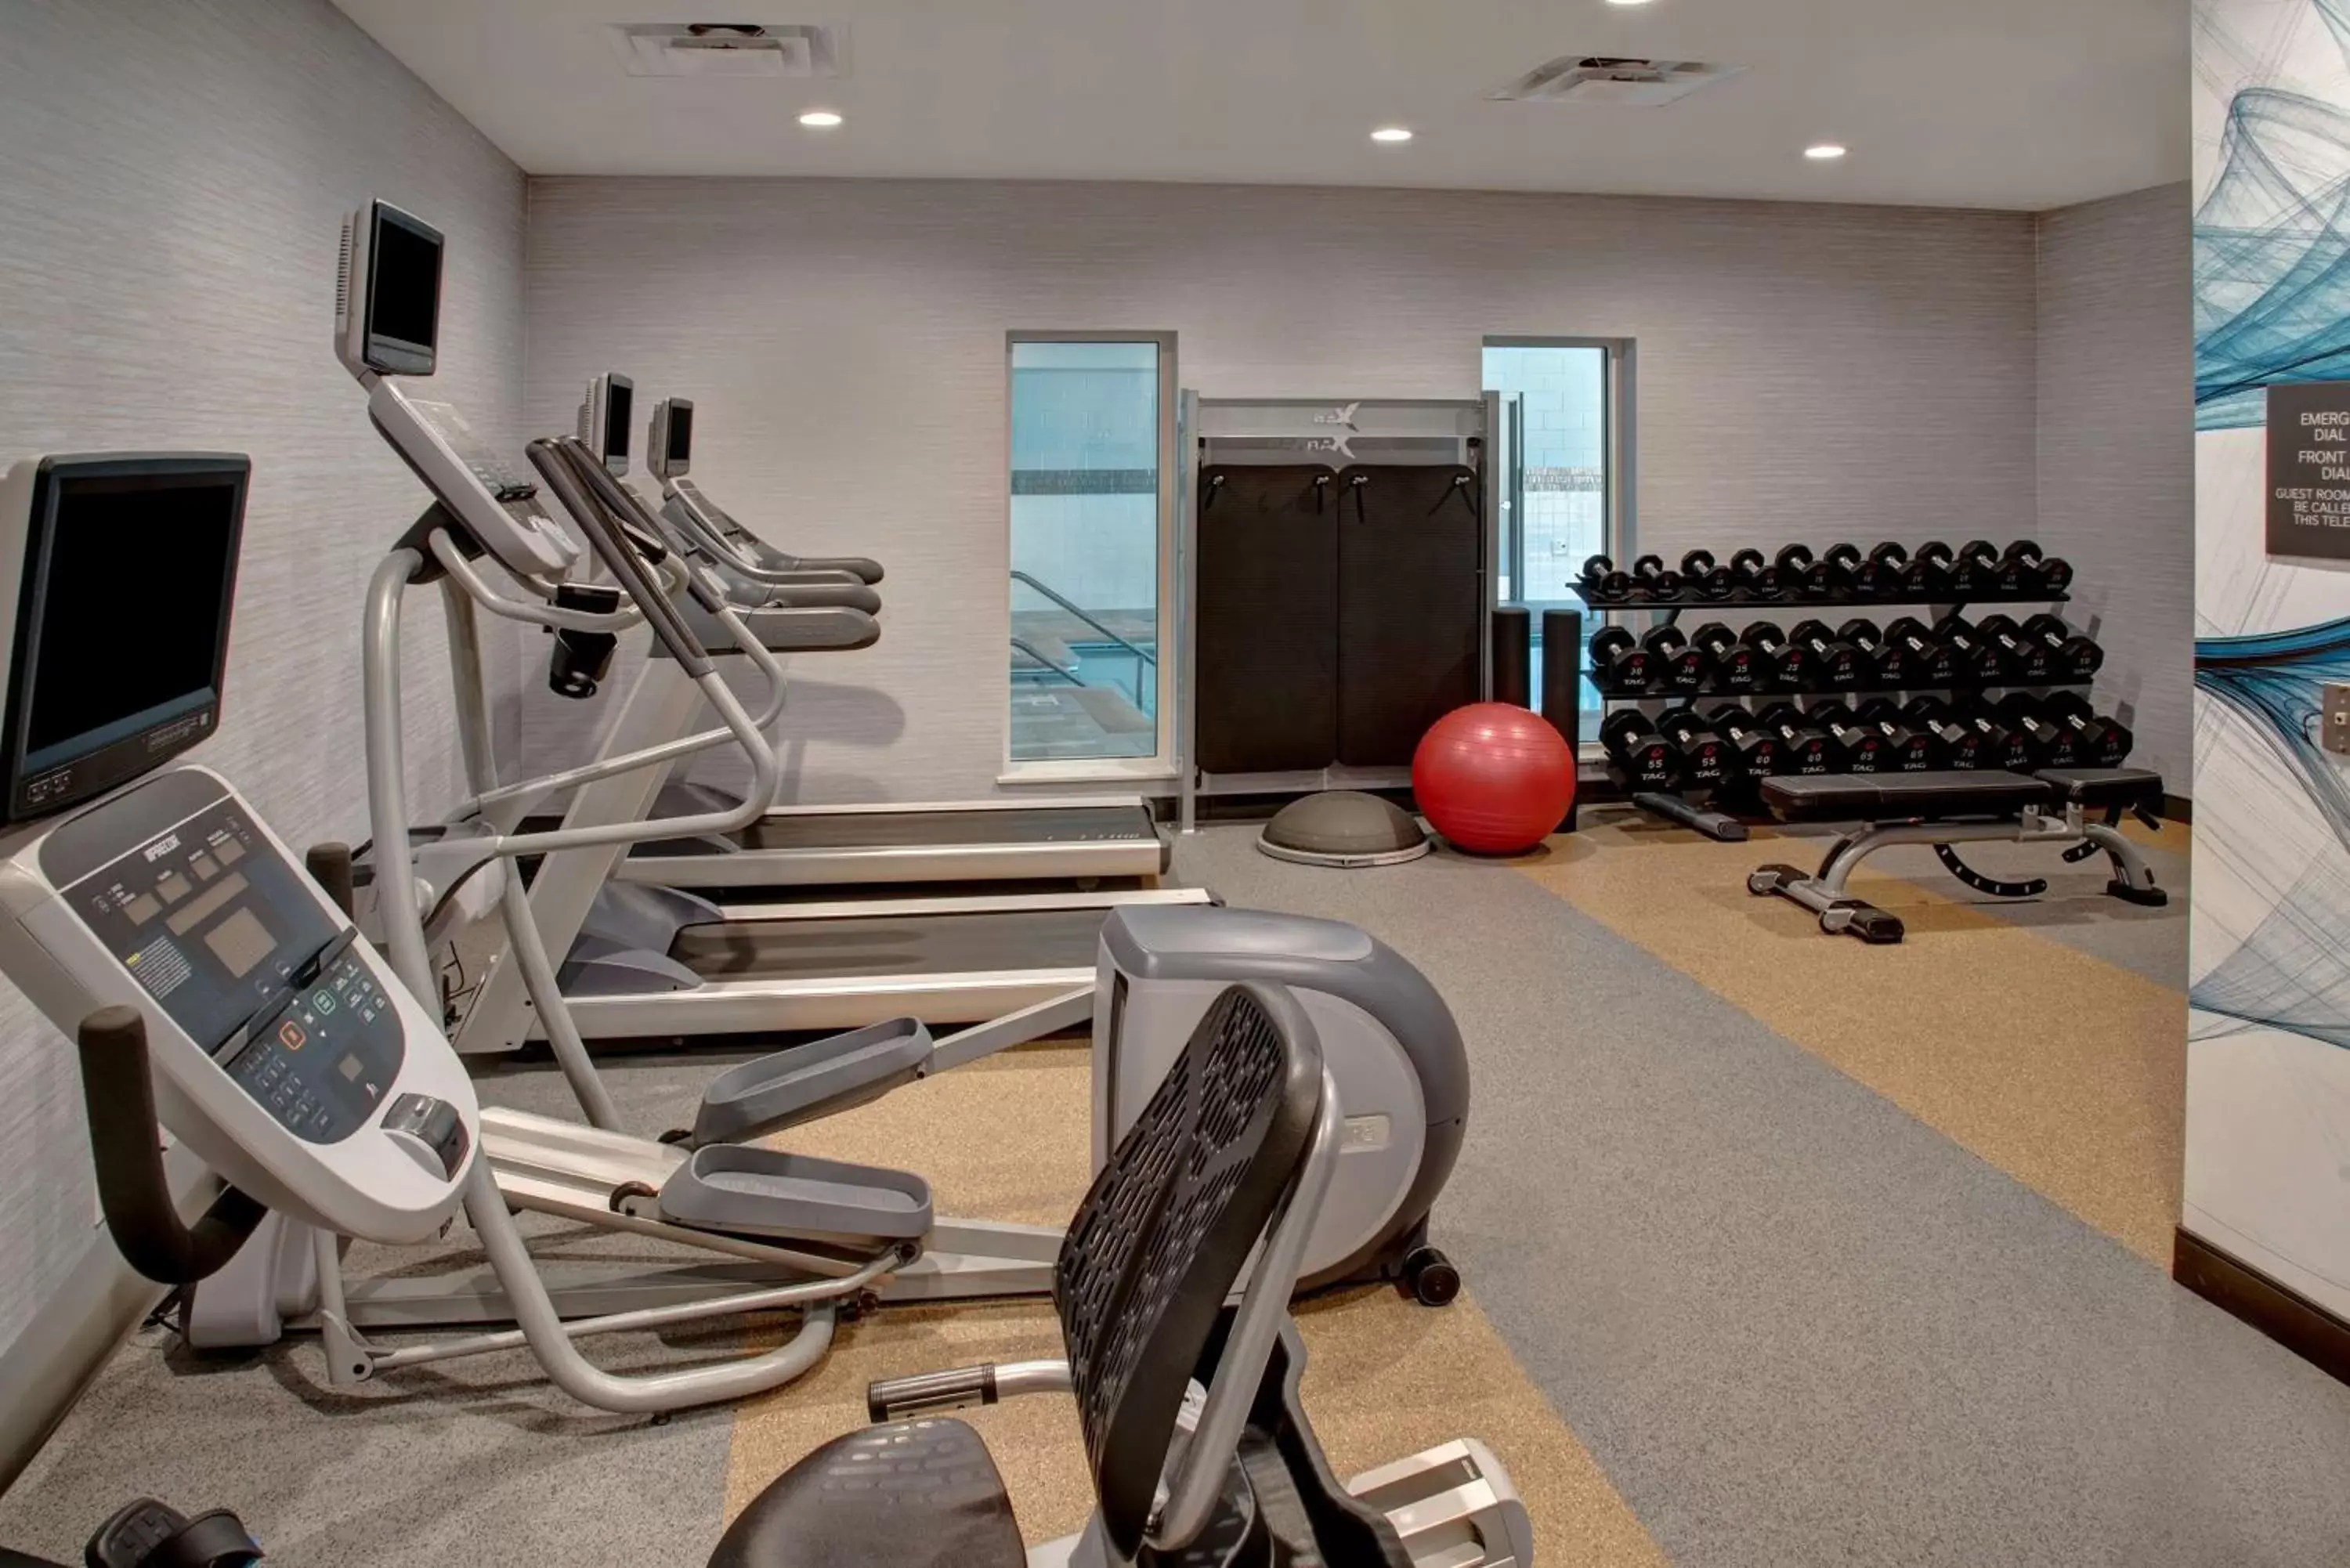 Fitness centre/facilities, Fitness Center/Facilities in Hilton Garden Inn Kansas City/Kansas